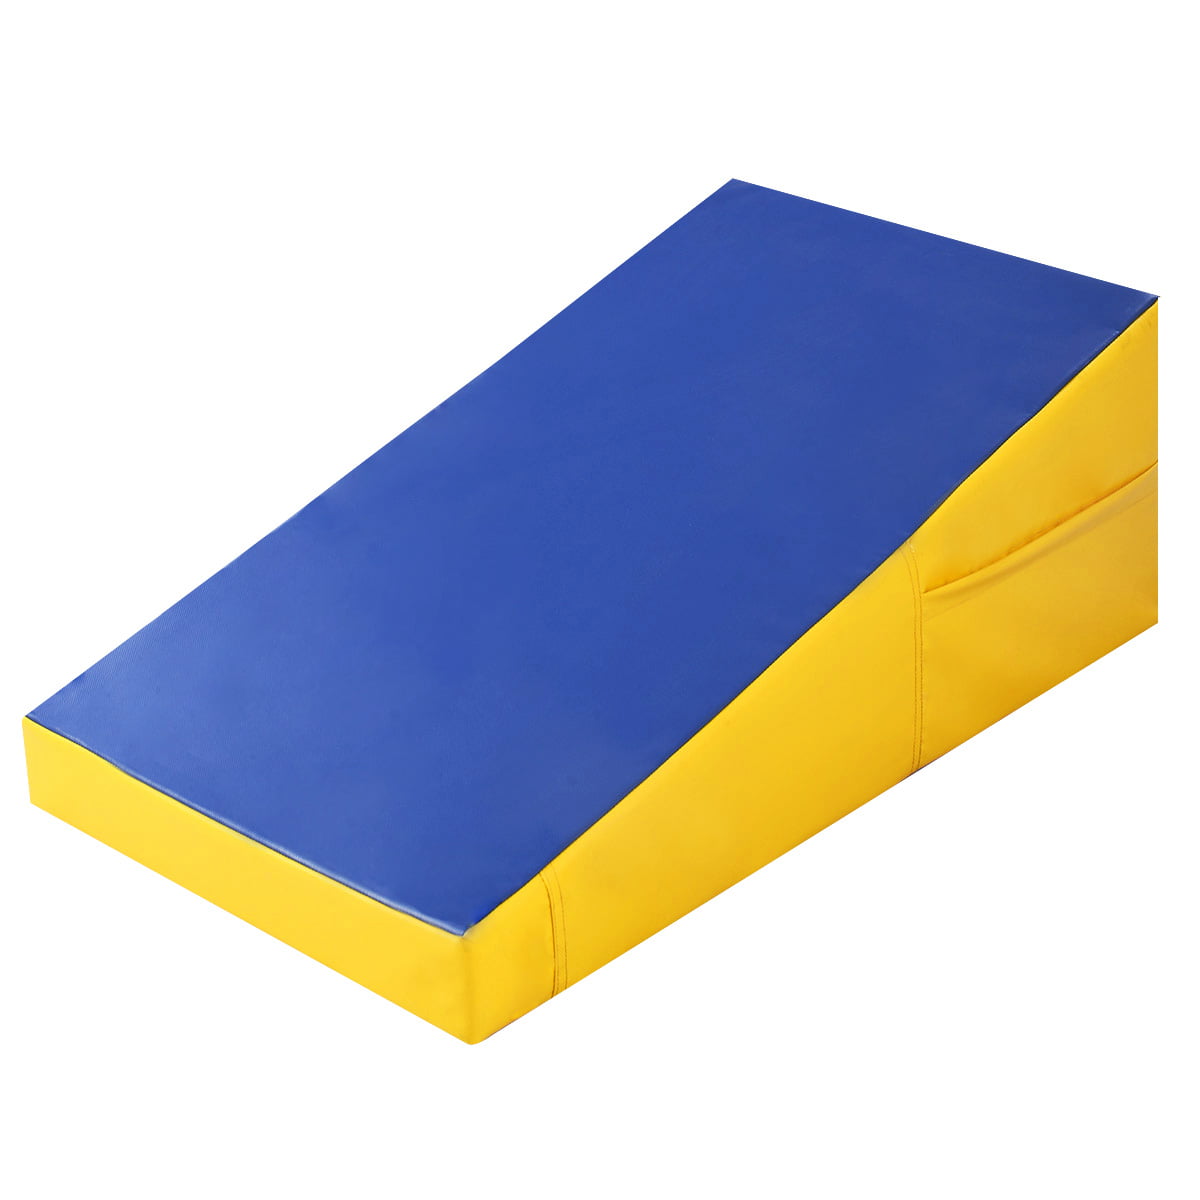 wedge gymnastics mat used